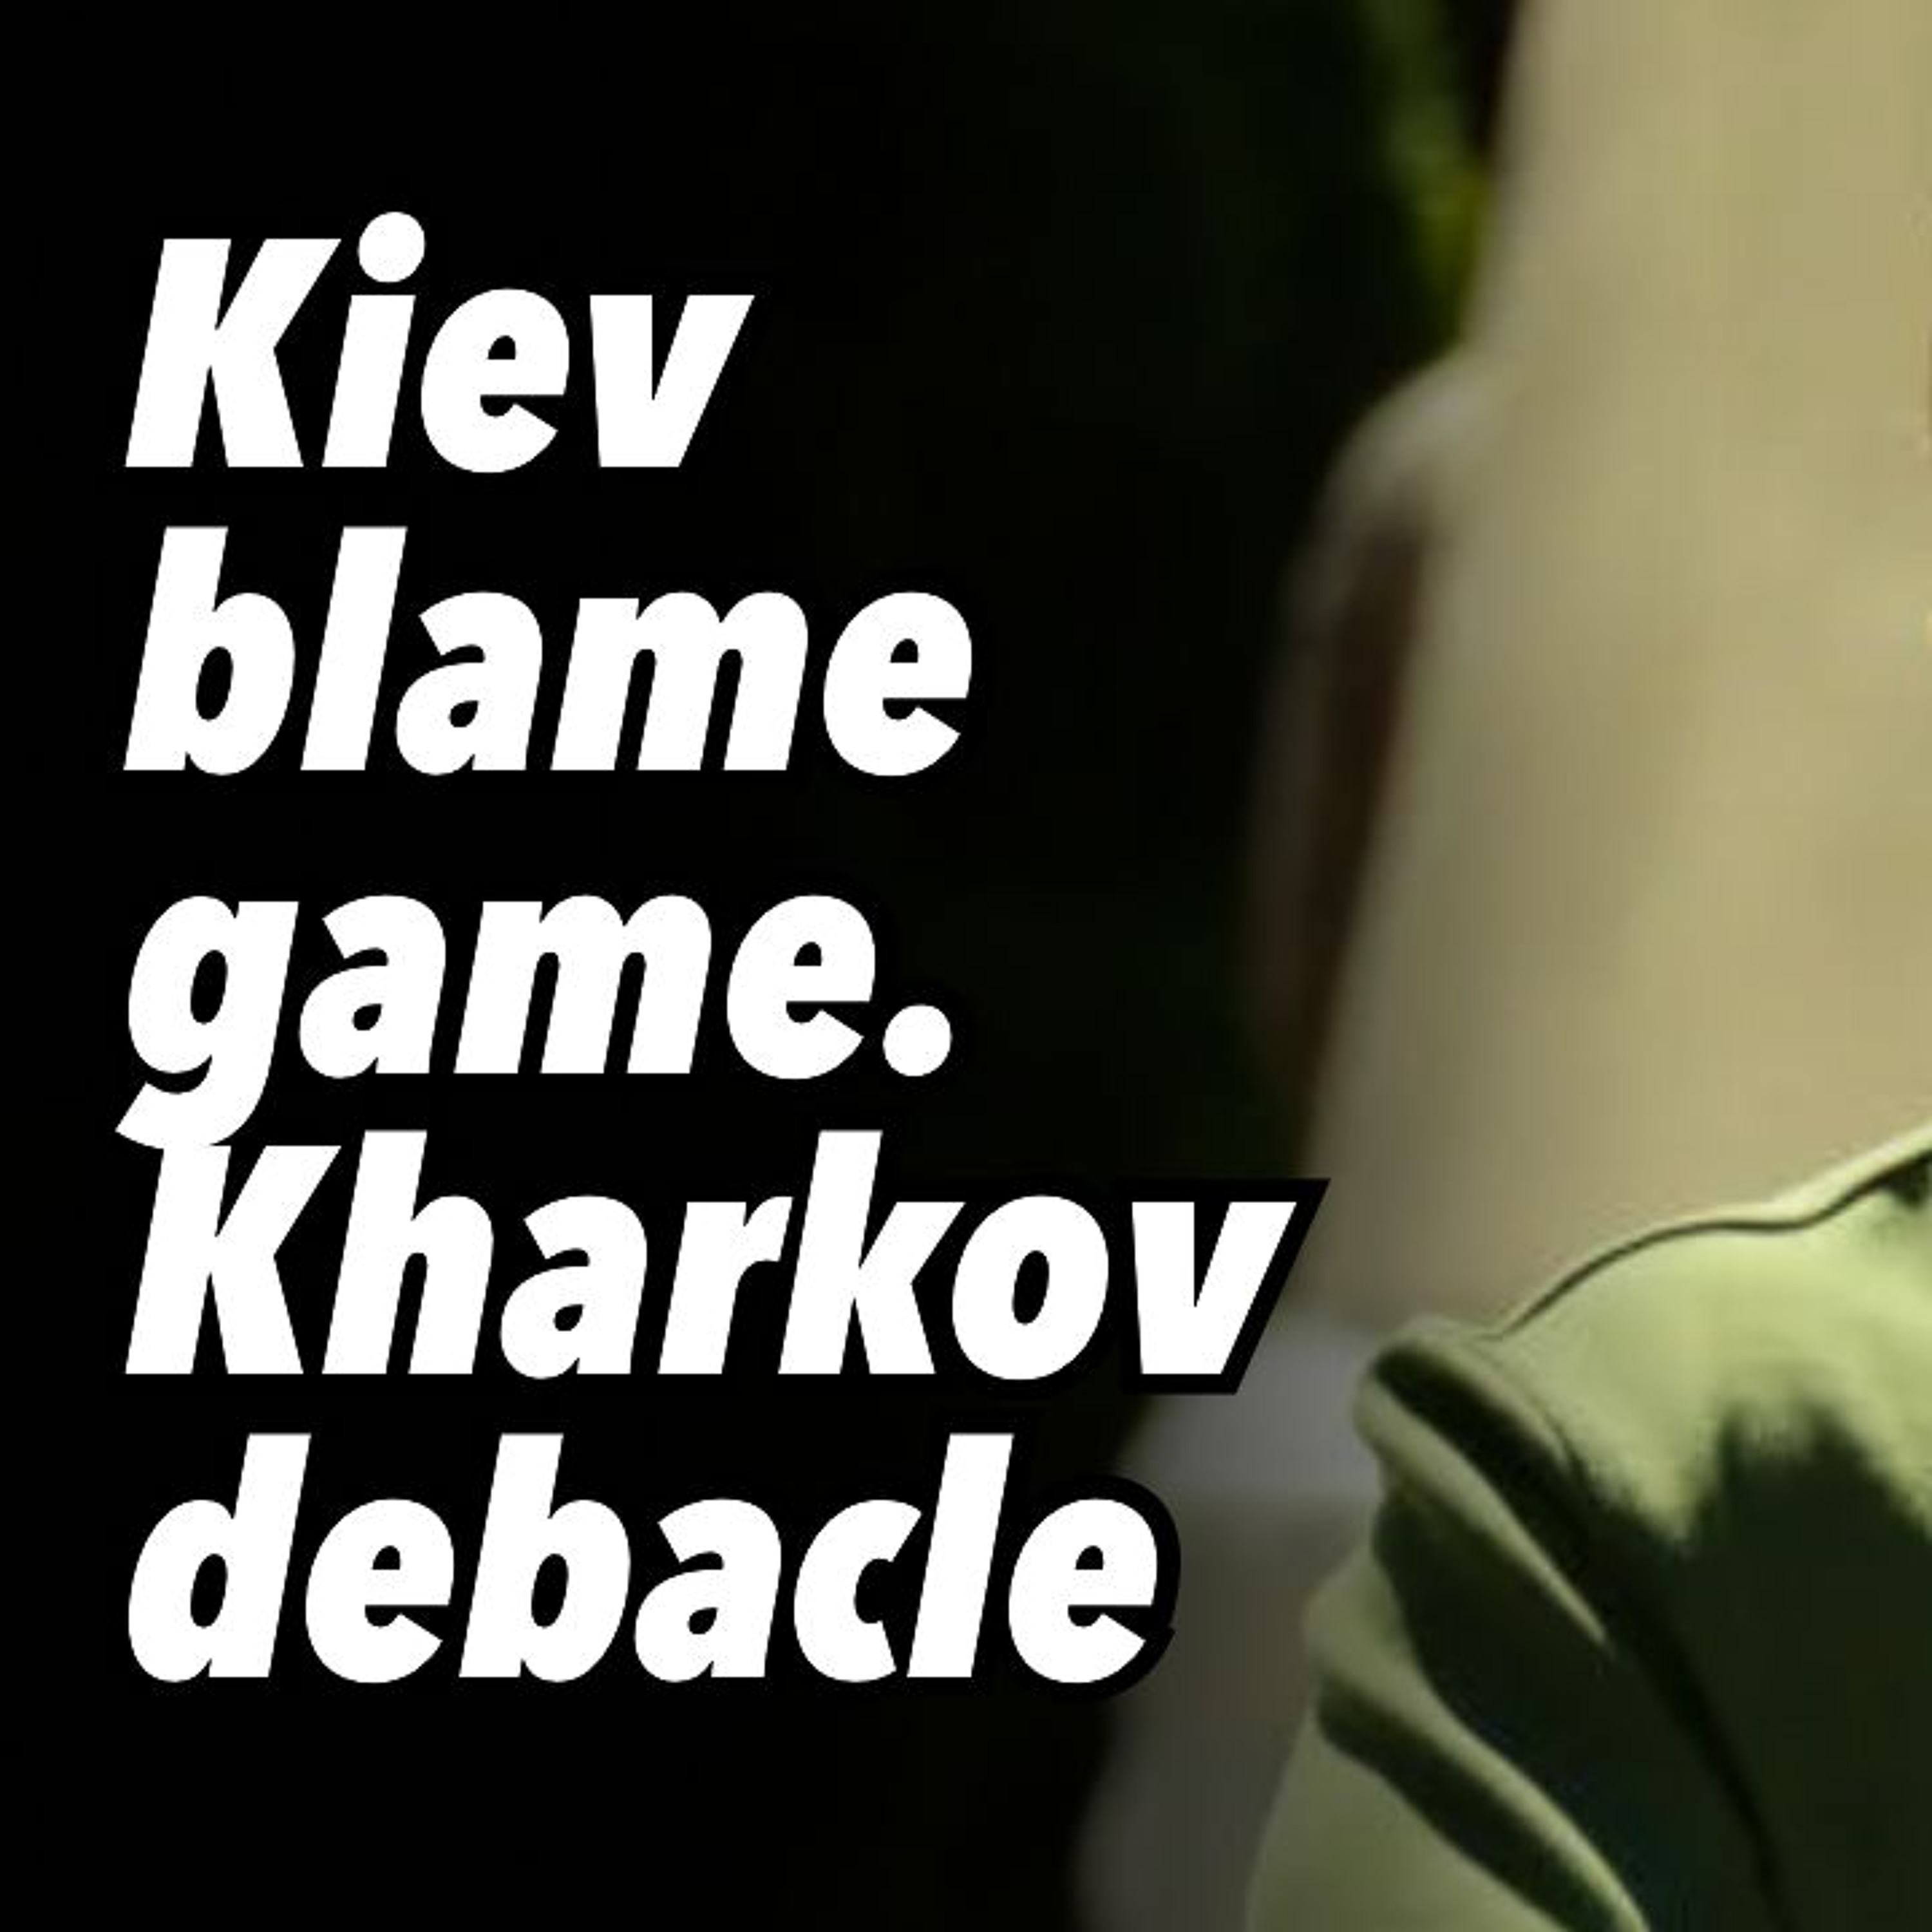 Kiev blame game. Kharkov debacle